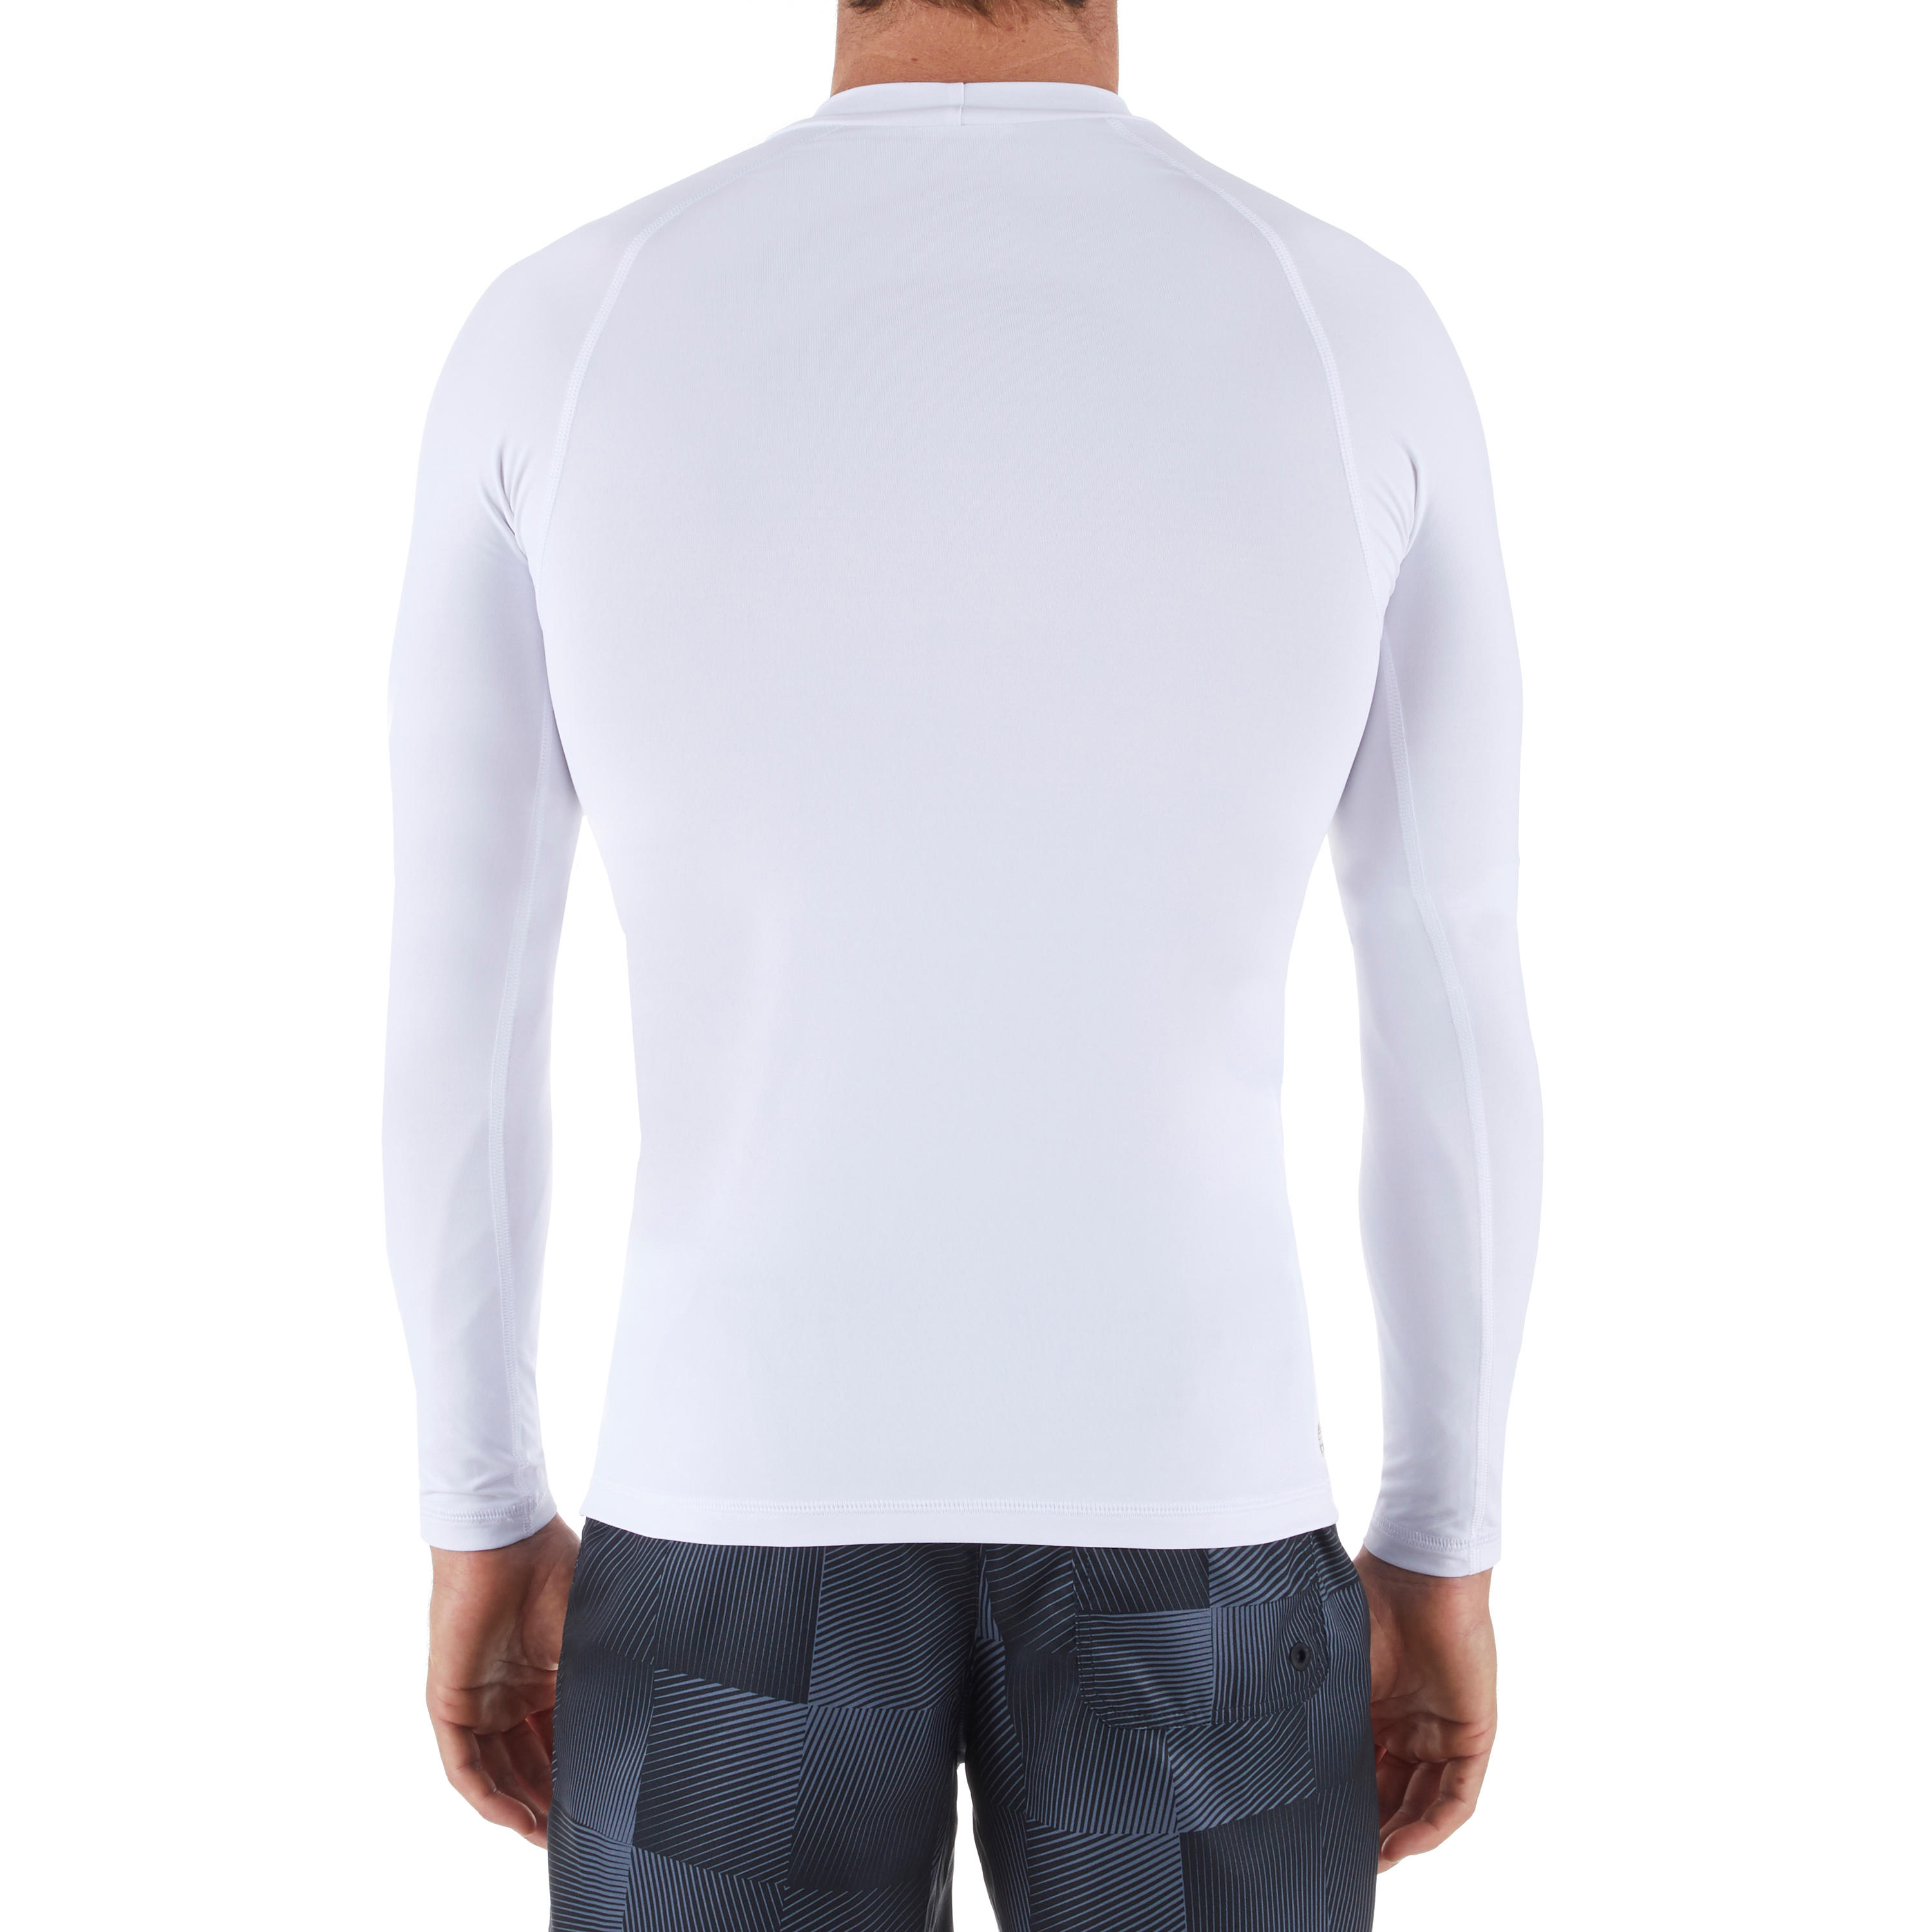 100 Men's Long Sleeve UV Protection Surfing Top T-Shirt - White 1/6